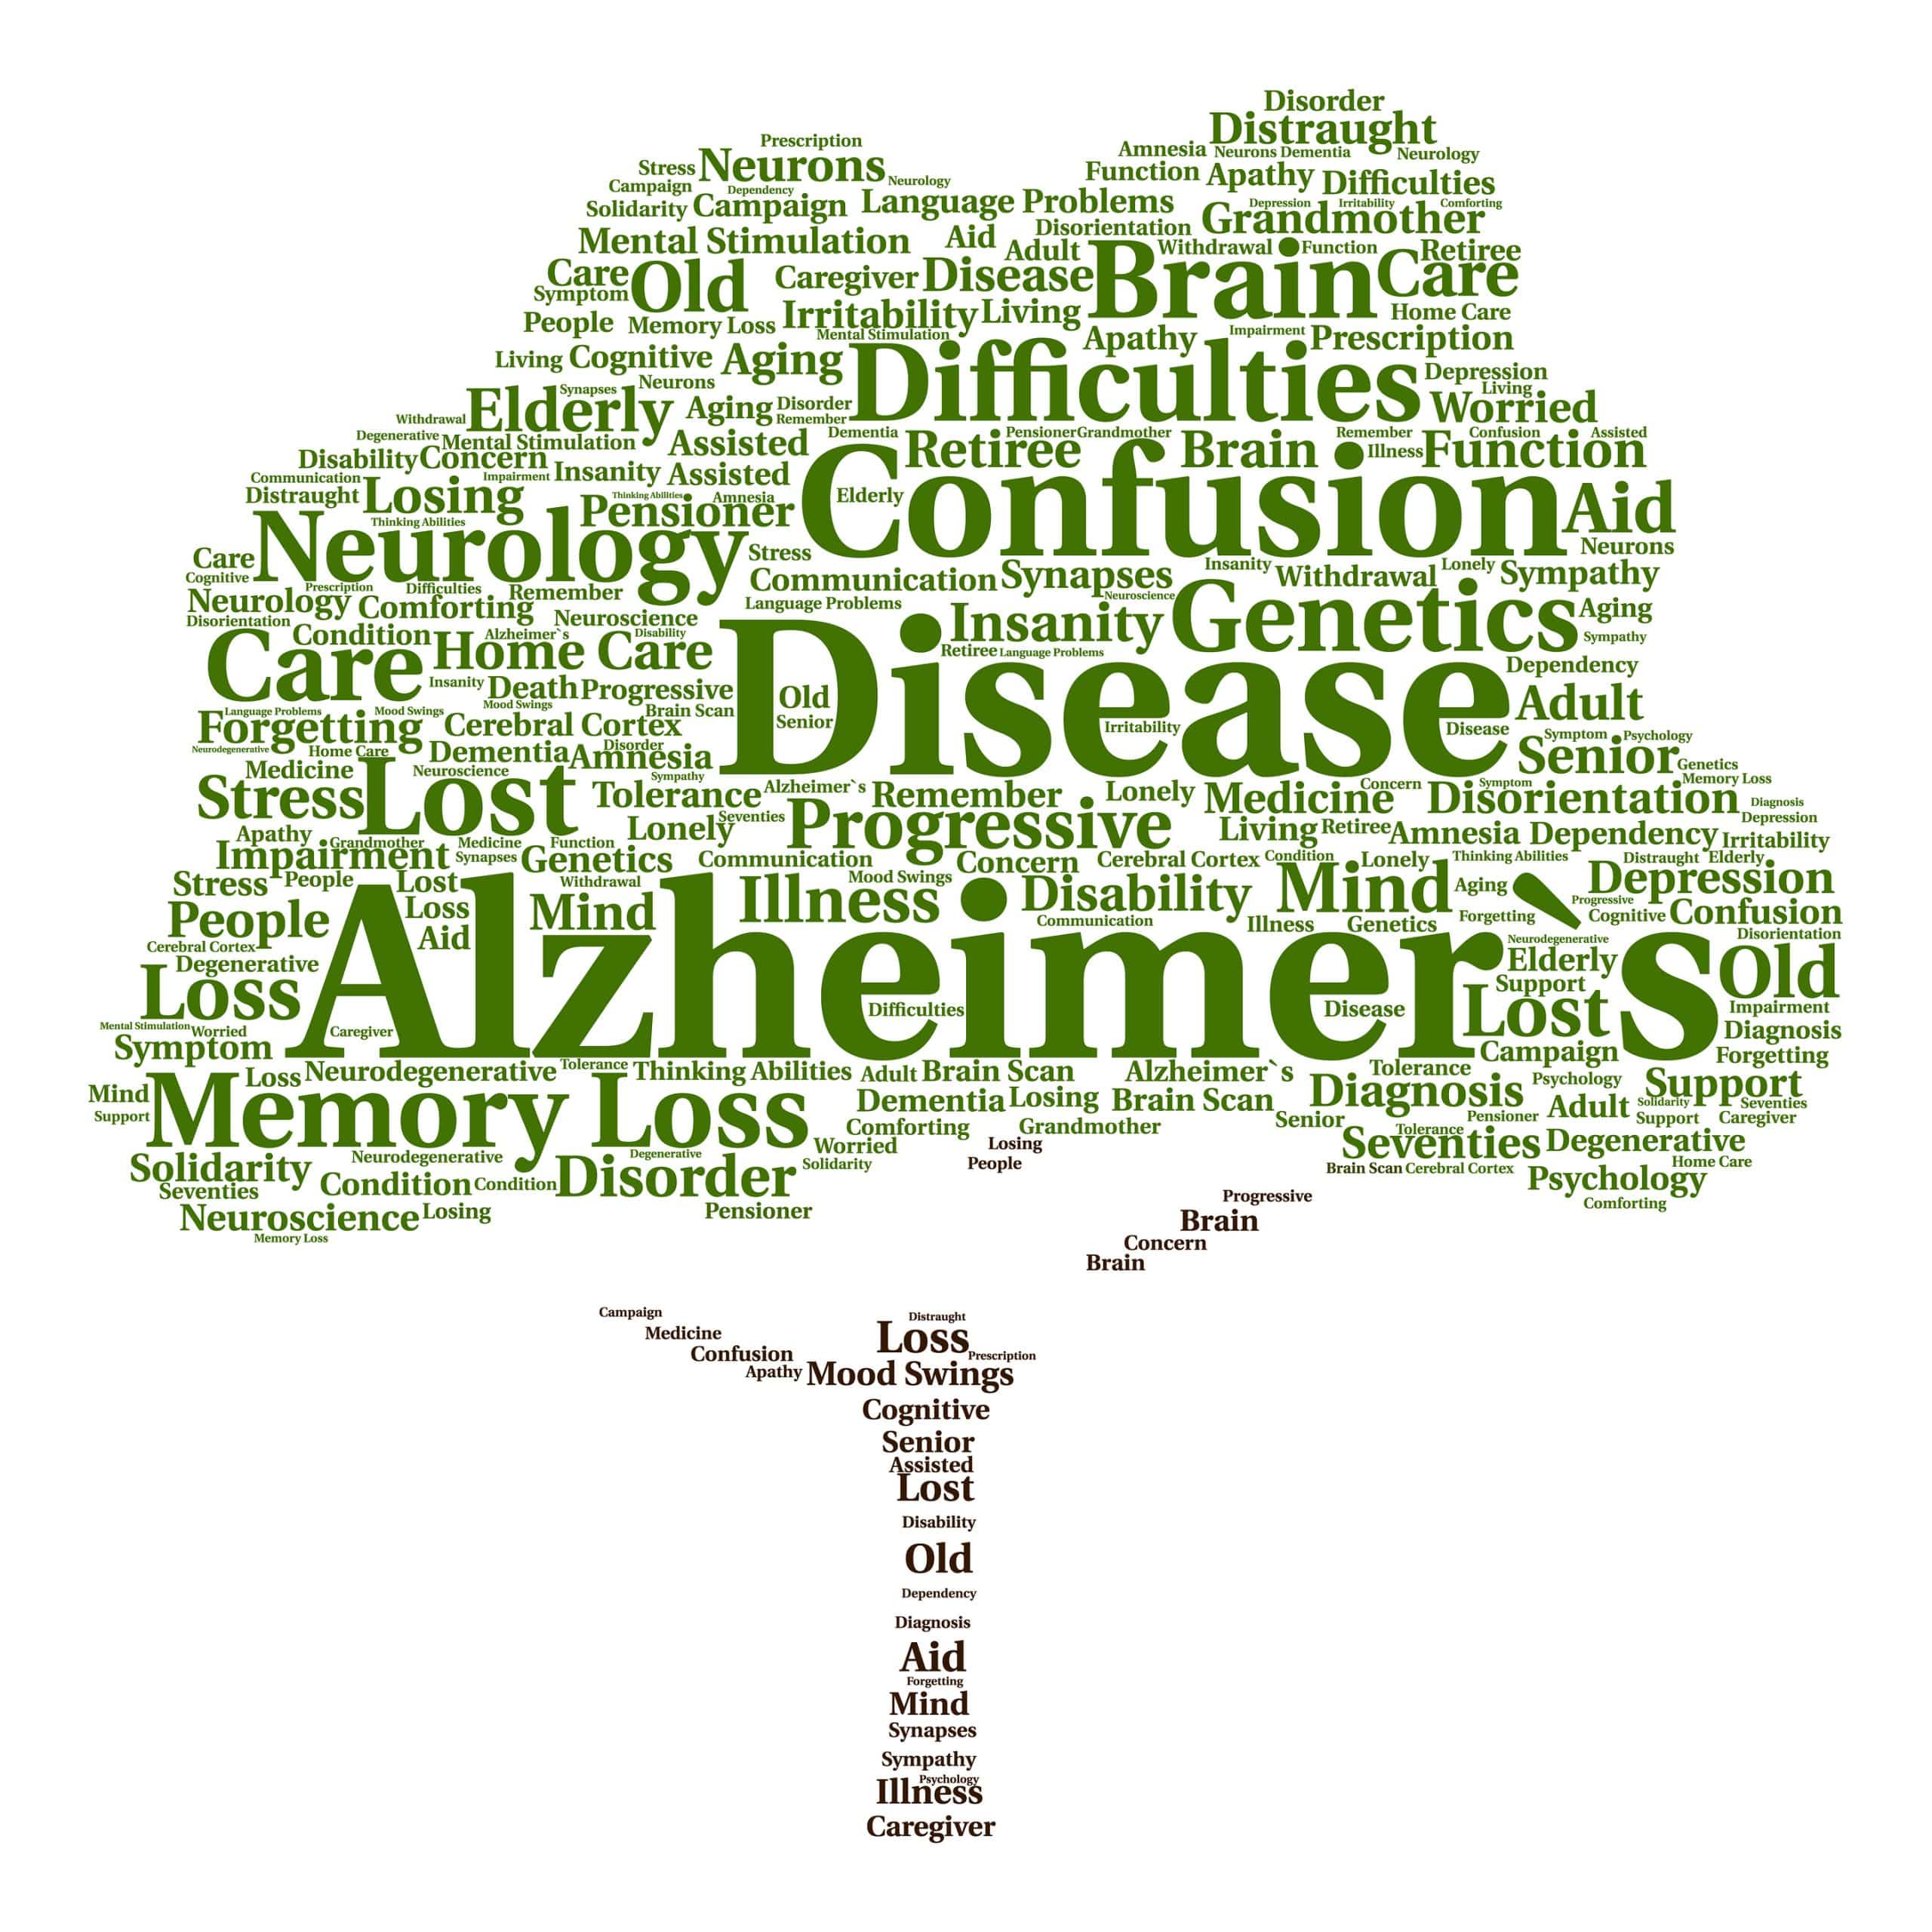 5 Hobbies That Help Prevent Alzheimers Disease and Dementia